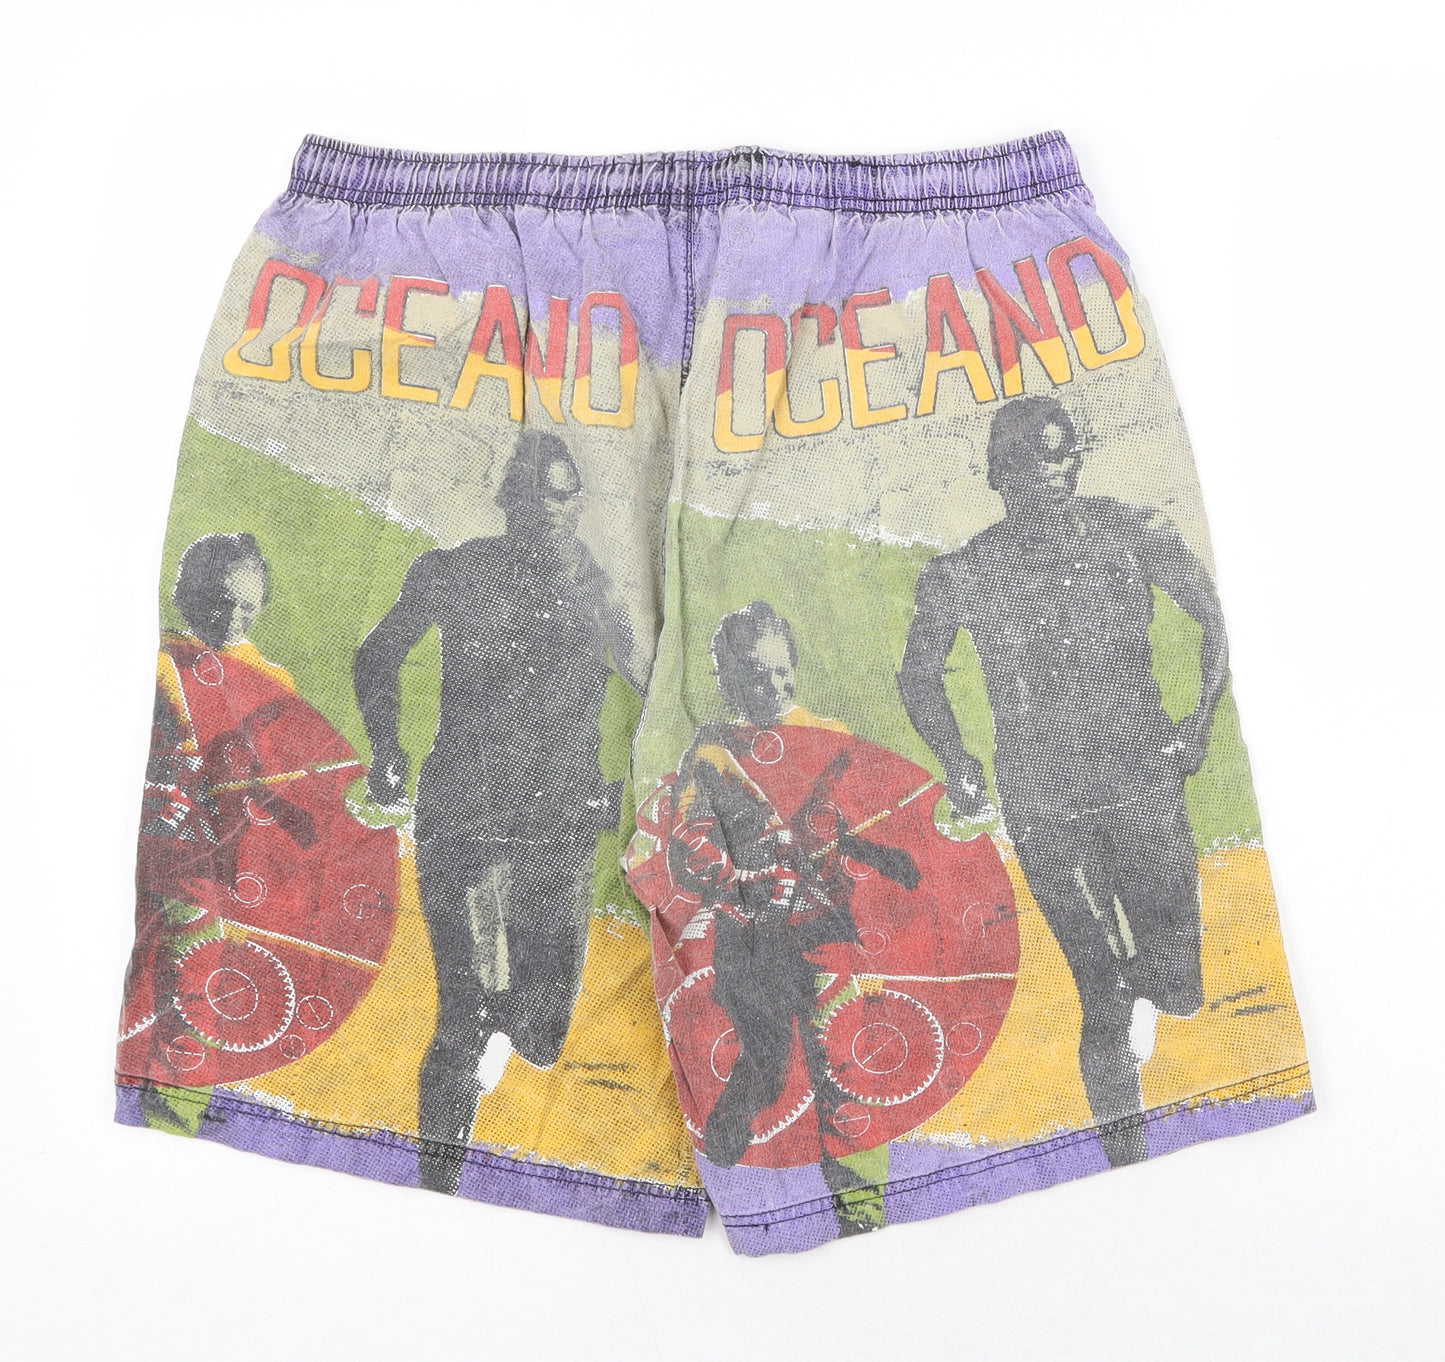 Richinco Mens Multicoloured Cotton Sweat Shorts Size 30 in Regular Drawstring